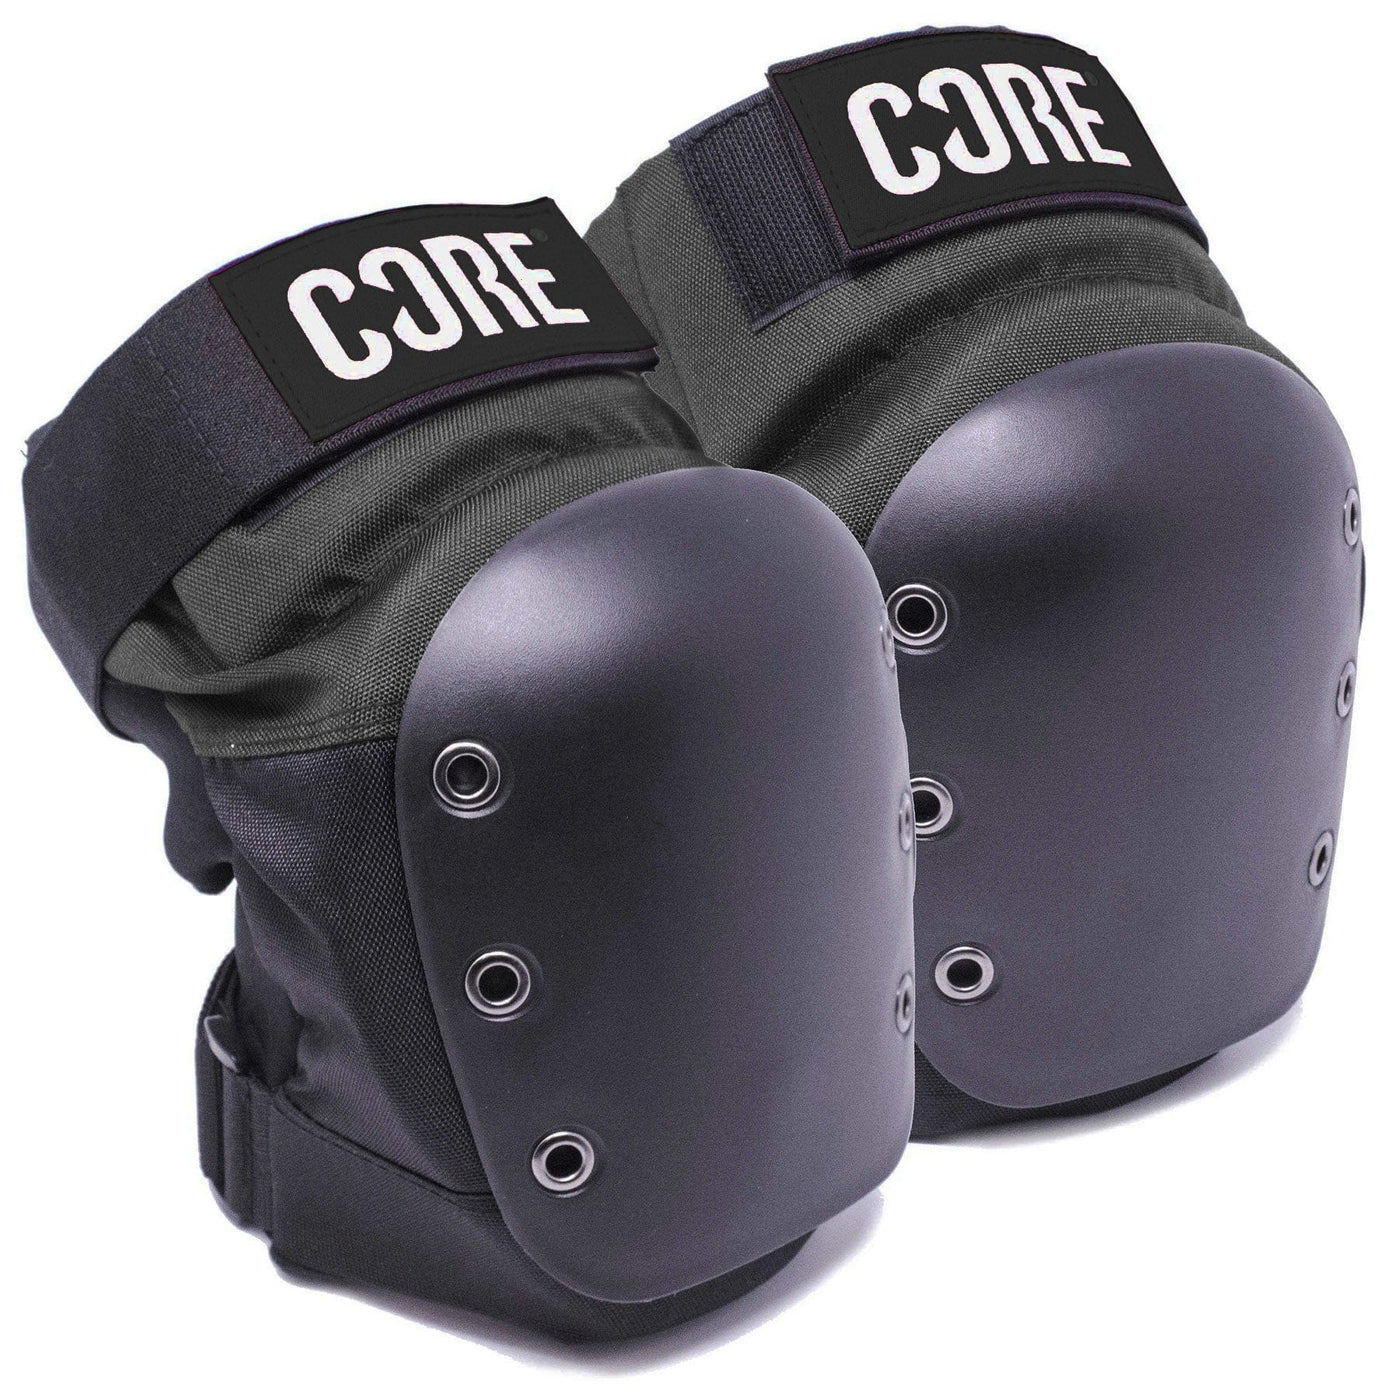 CORE Black/Grey Pro Protection I Skate Knee Pads